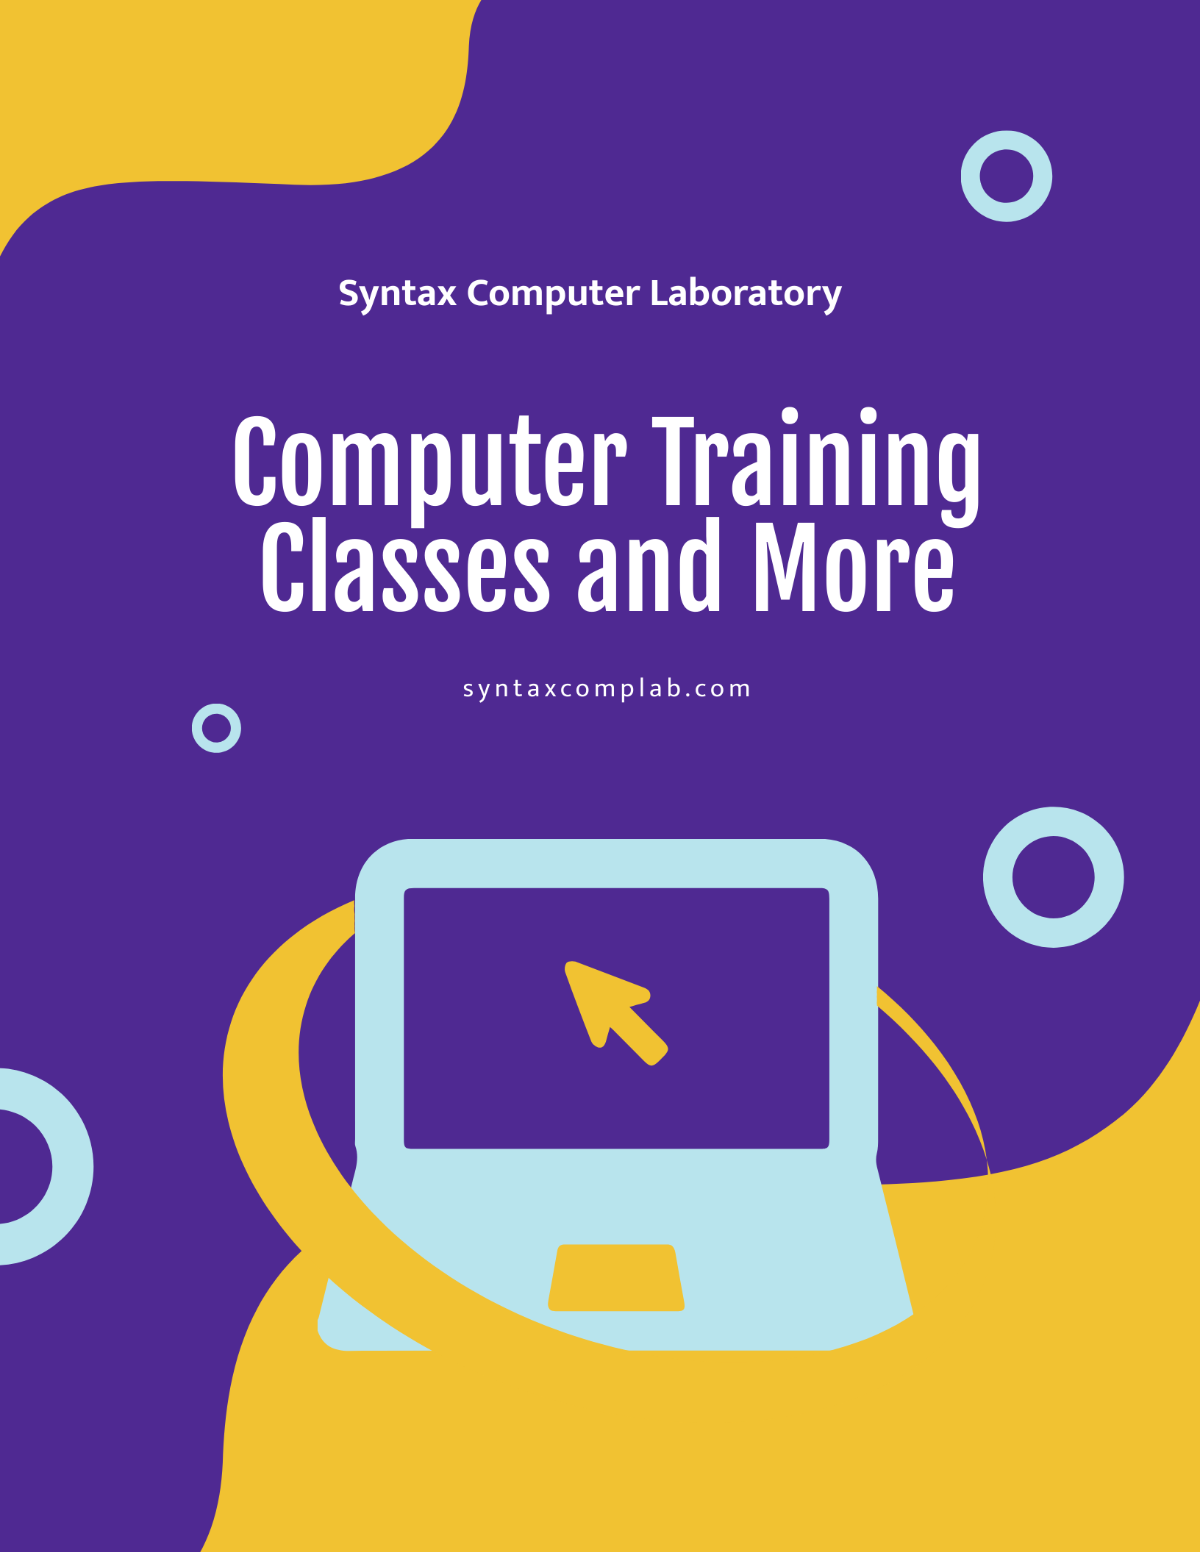 Computer Training Flyer